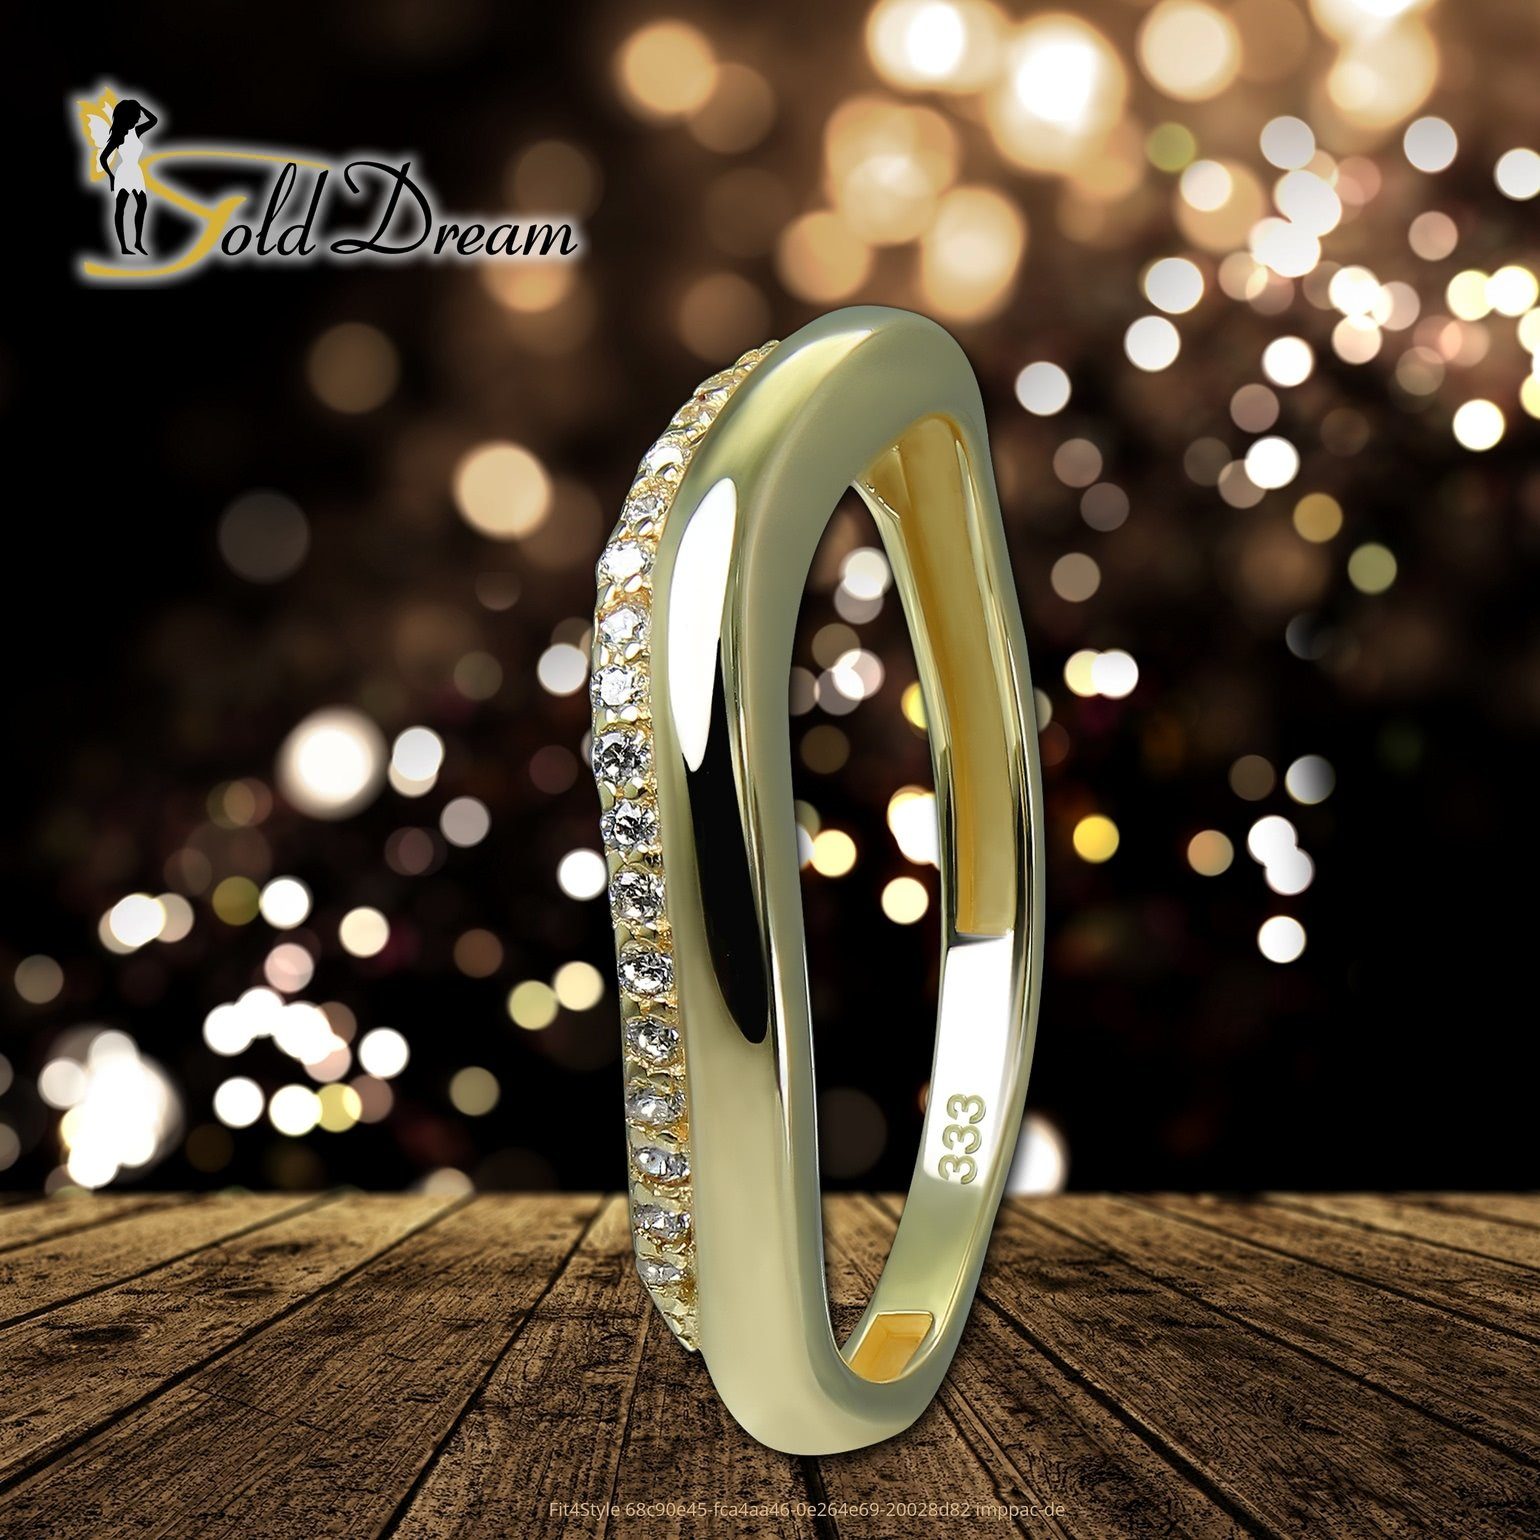 gold, - Ring Damen (Fingerring), 8 Zirkonia GoldDream Farbe: 333 Welle Karat, Welle Goldring Ring Gelbgold Gr.56 weiß Gold GoldDream